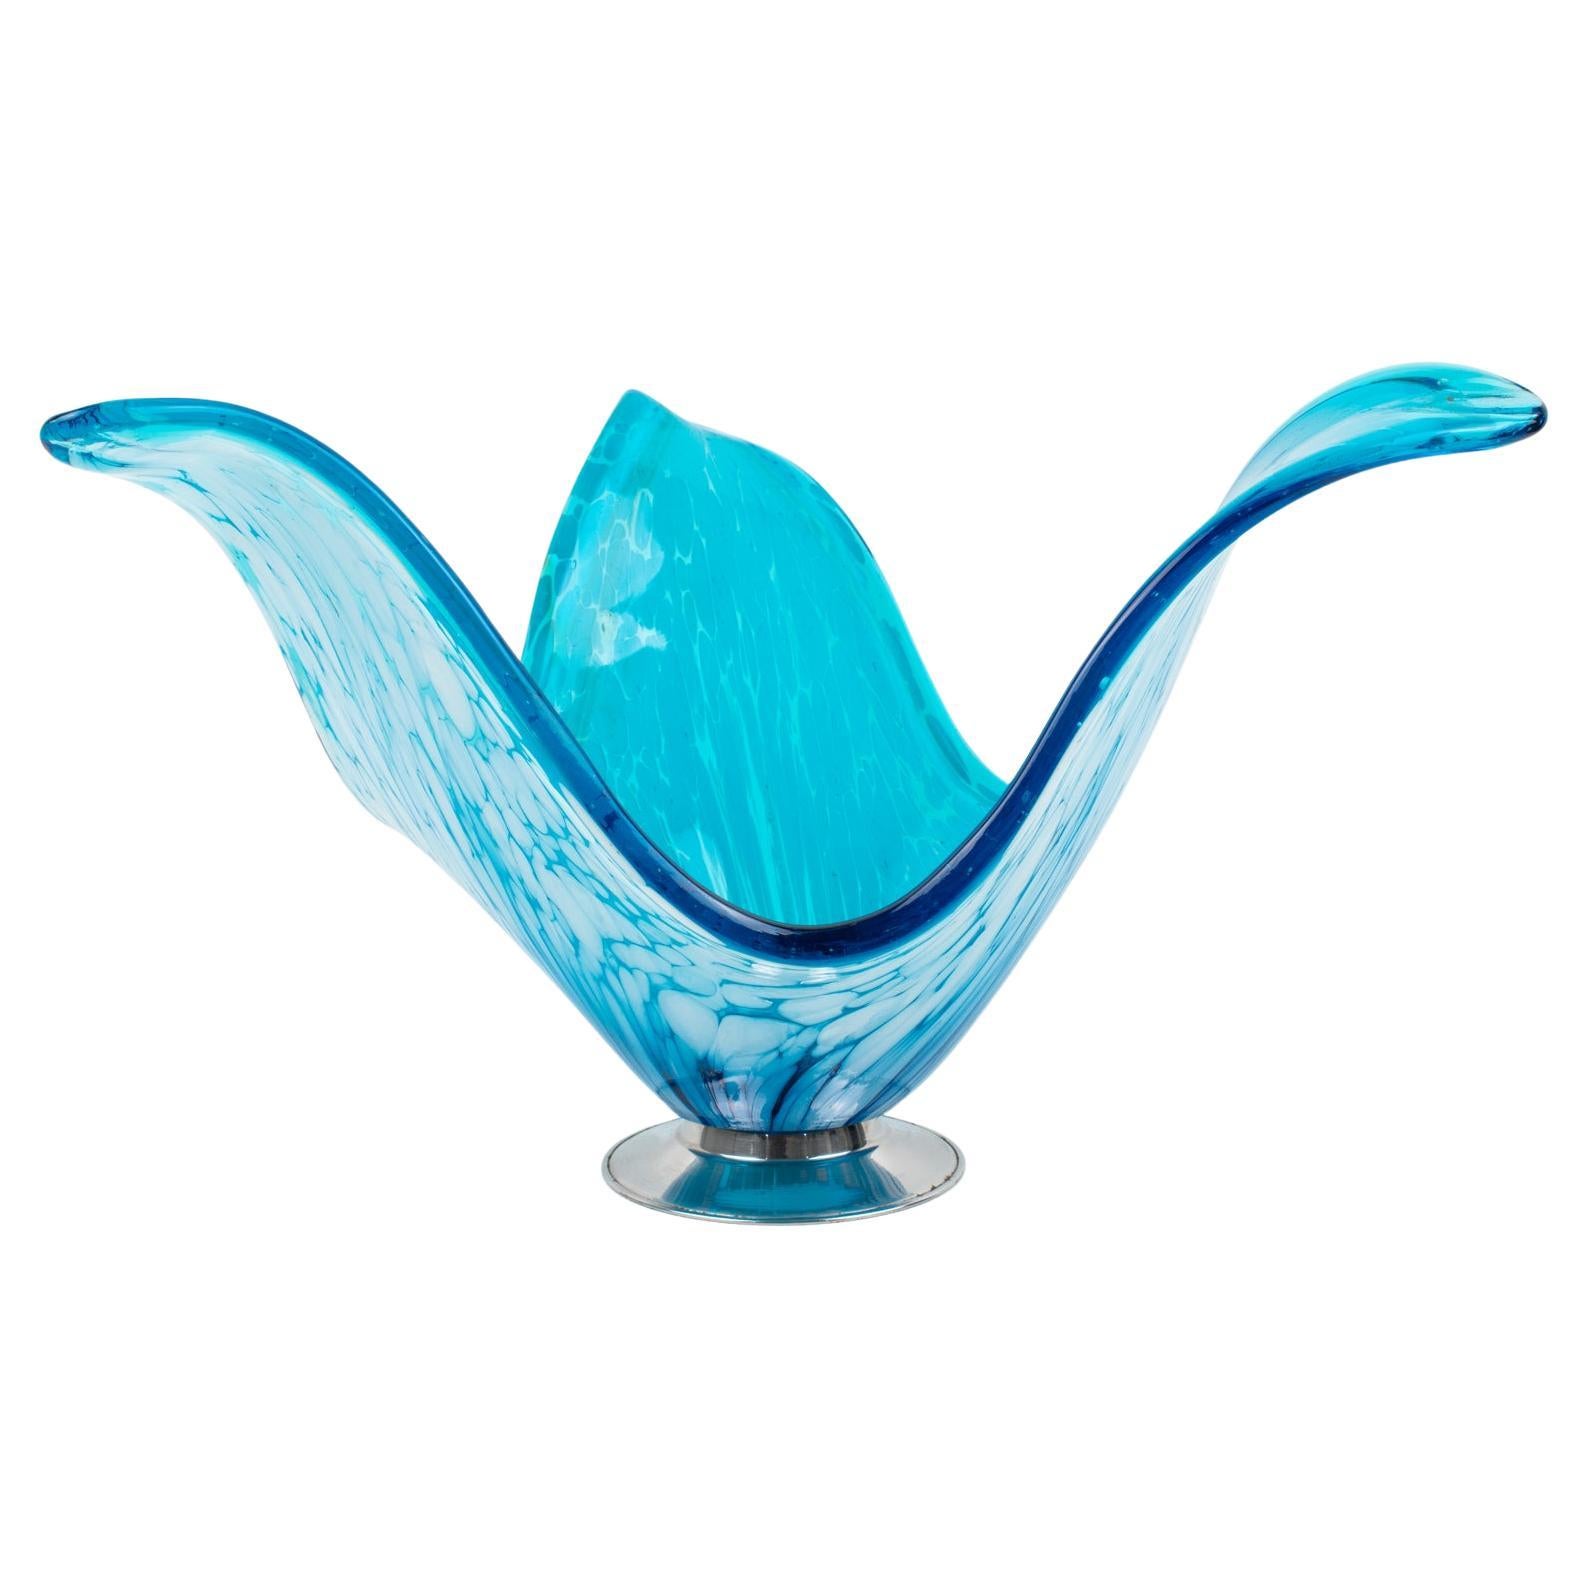 Italian Art Glass Murano Blue and White Sculptural Bowl Vase Centerpiece